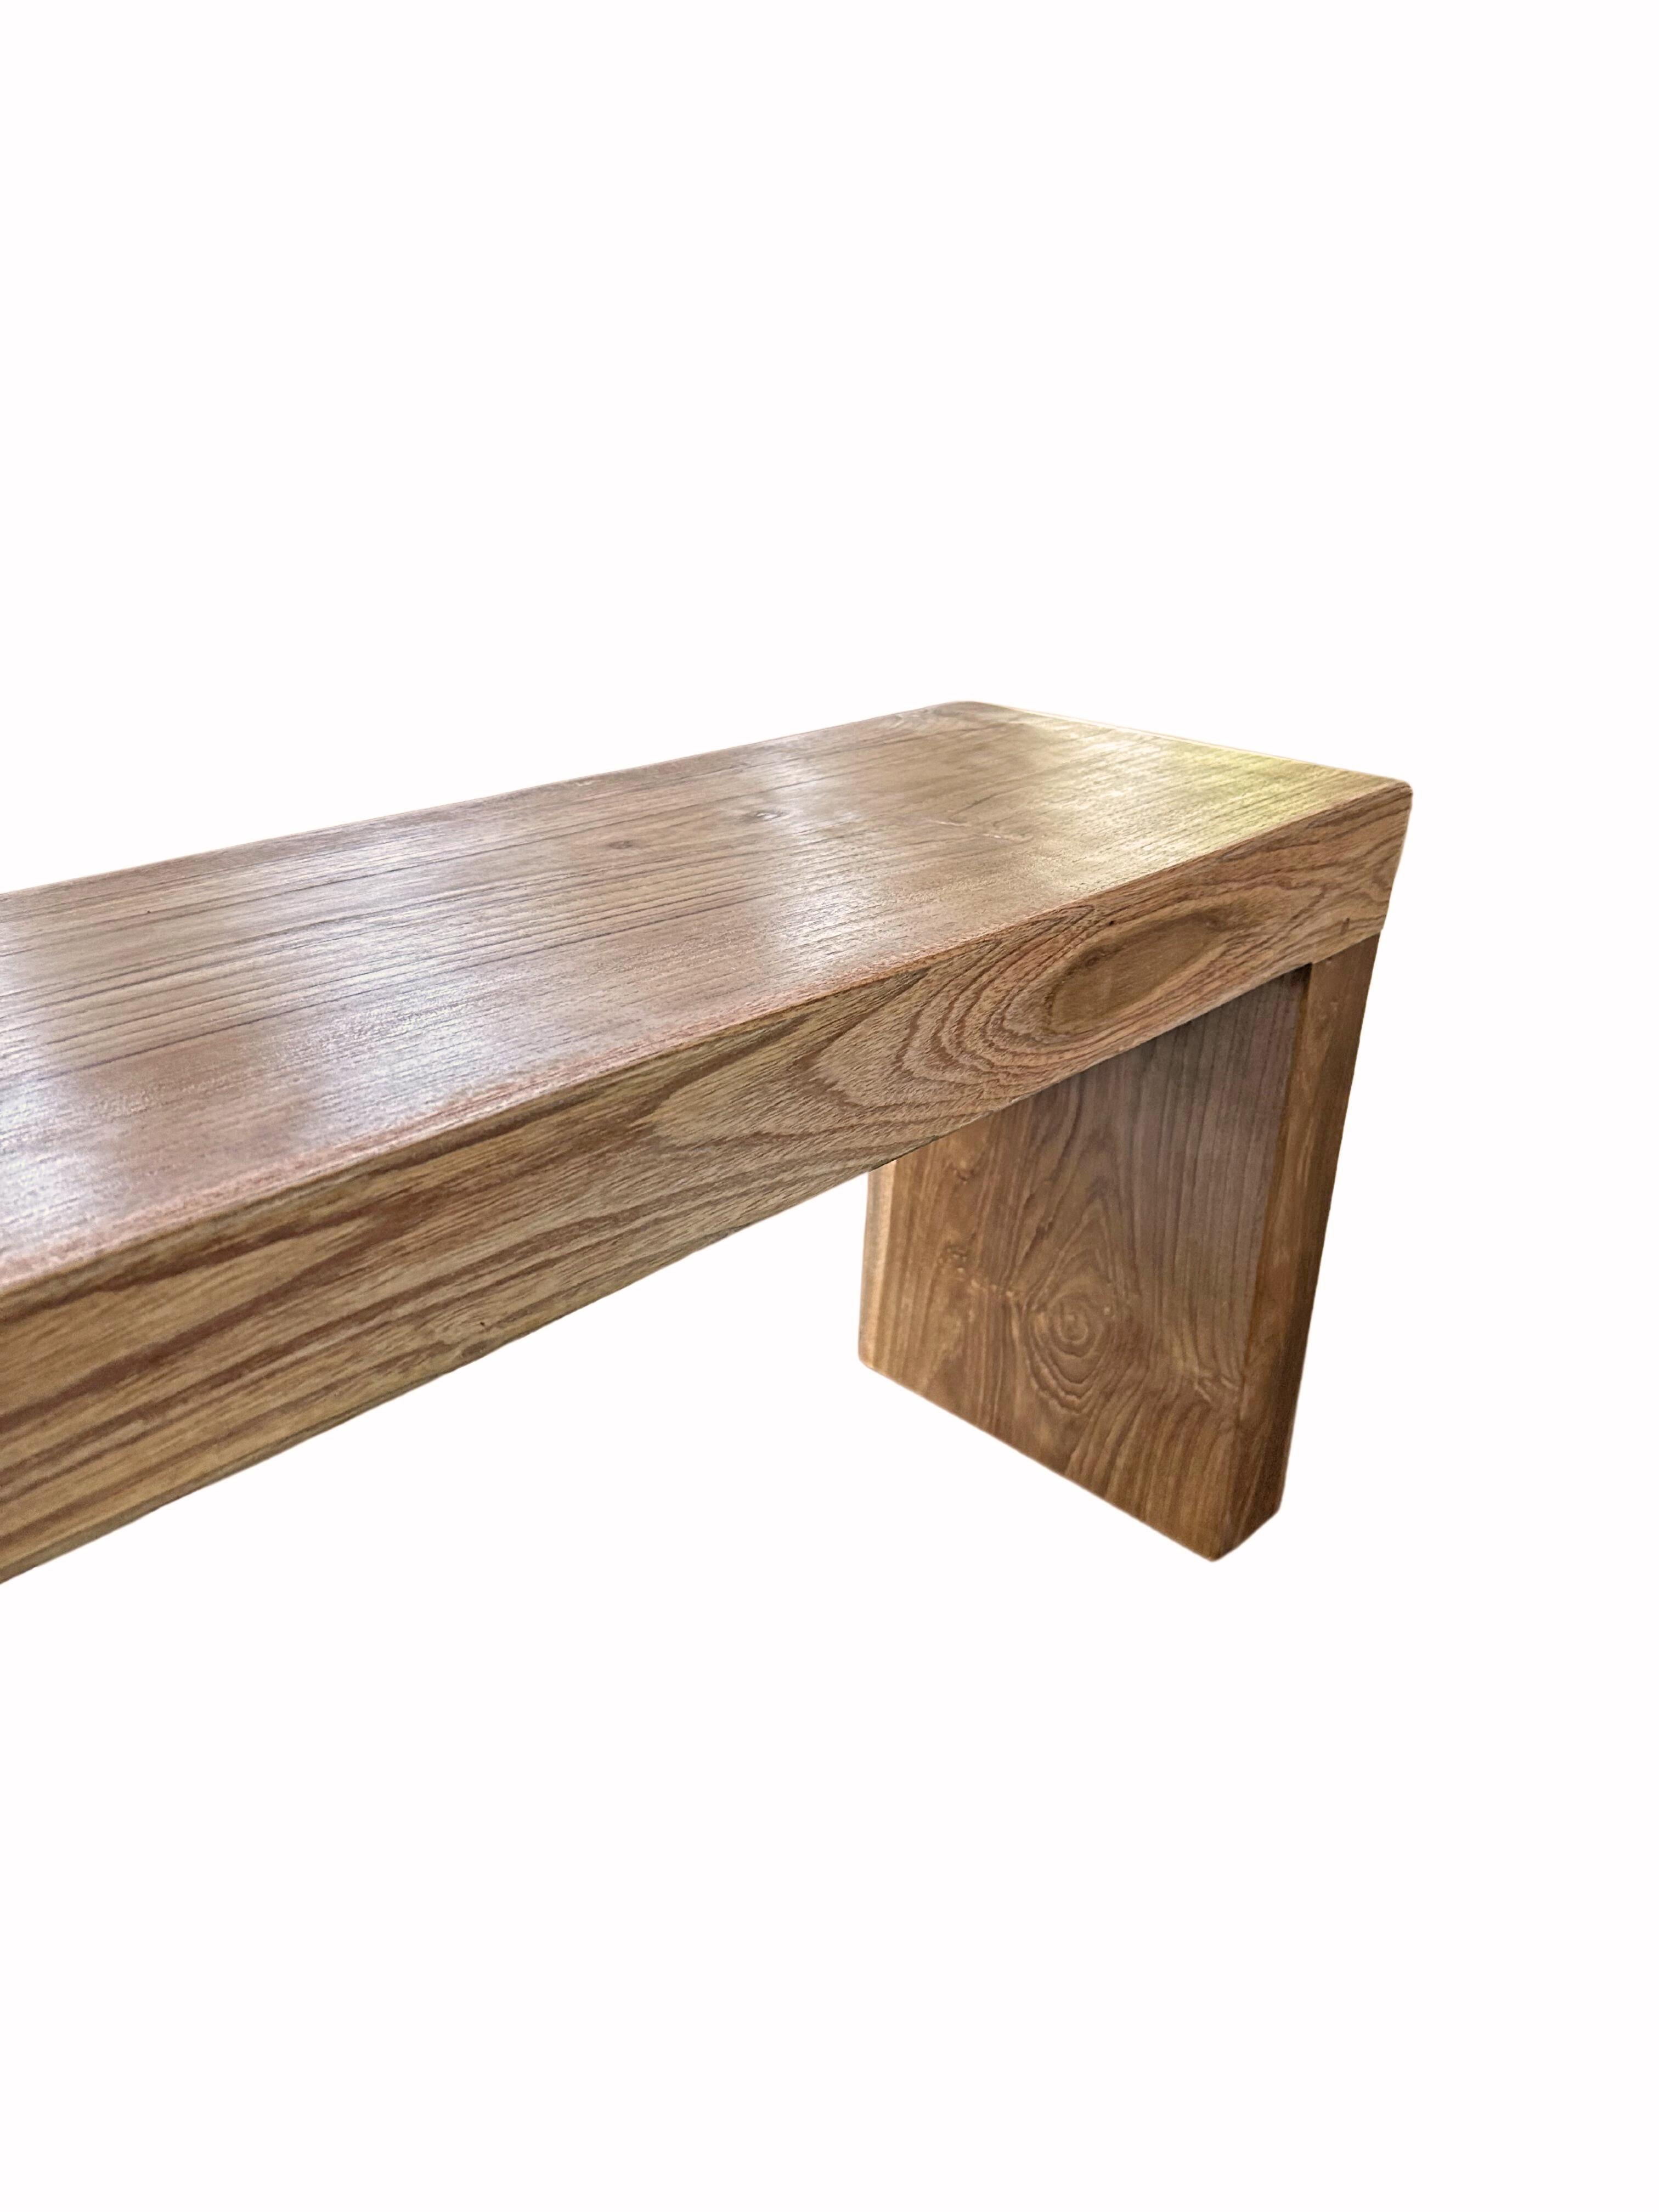 Other Sculptural Teak Wood Bench Modern Organic For Sale